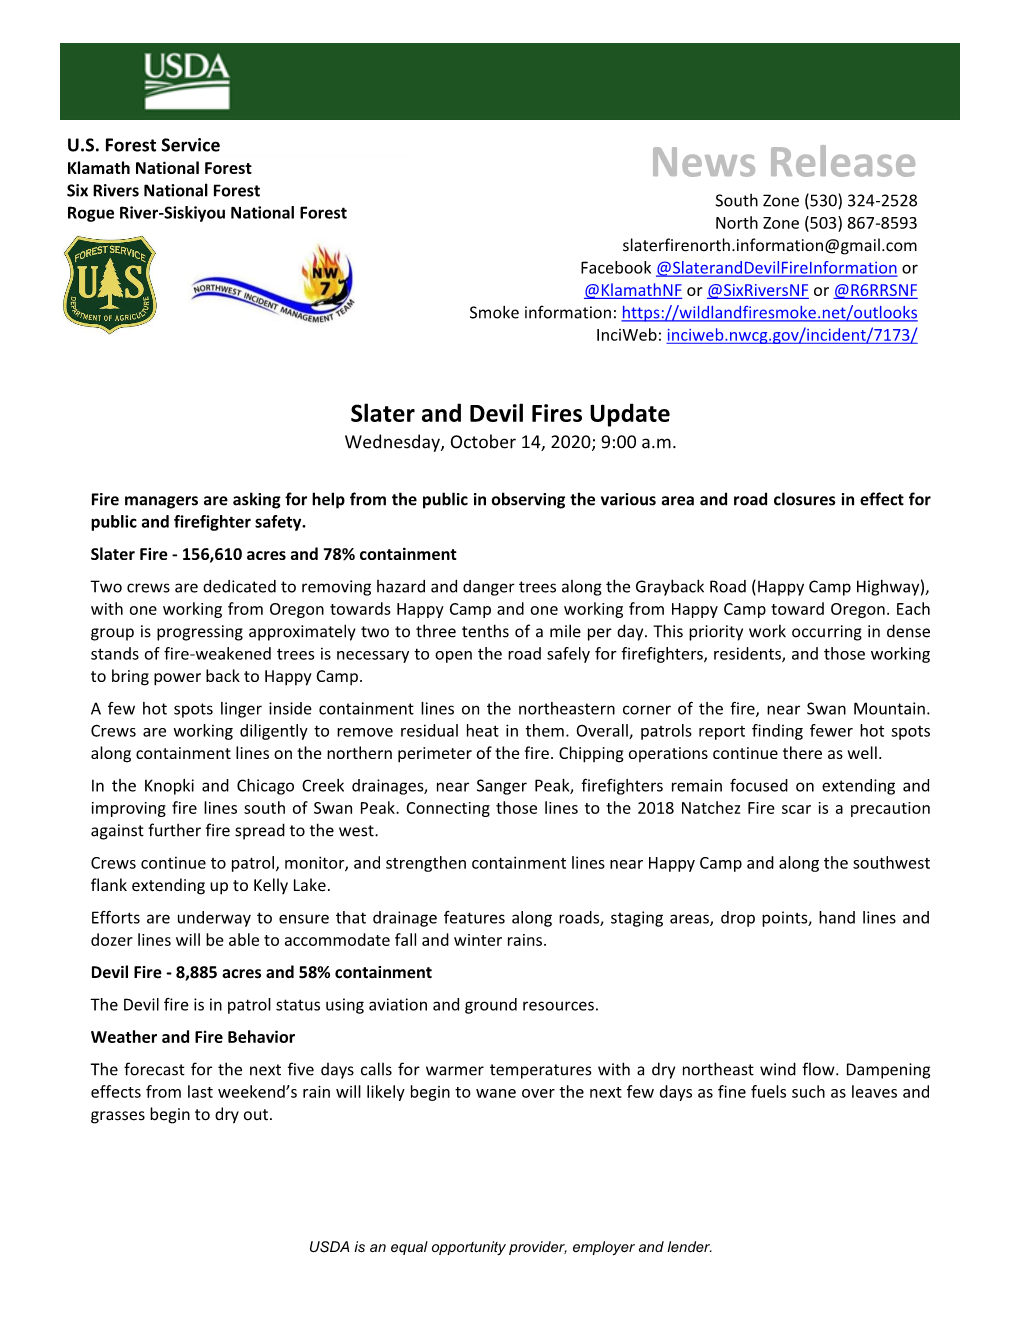 2020-10-14 Slater and Devil Fires Update (Pdf 767